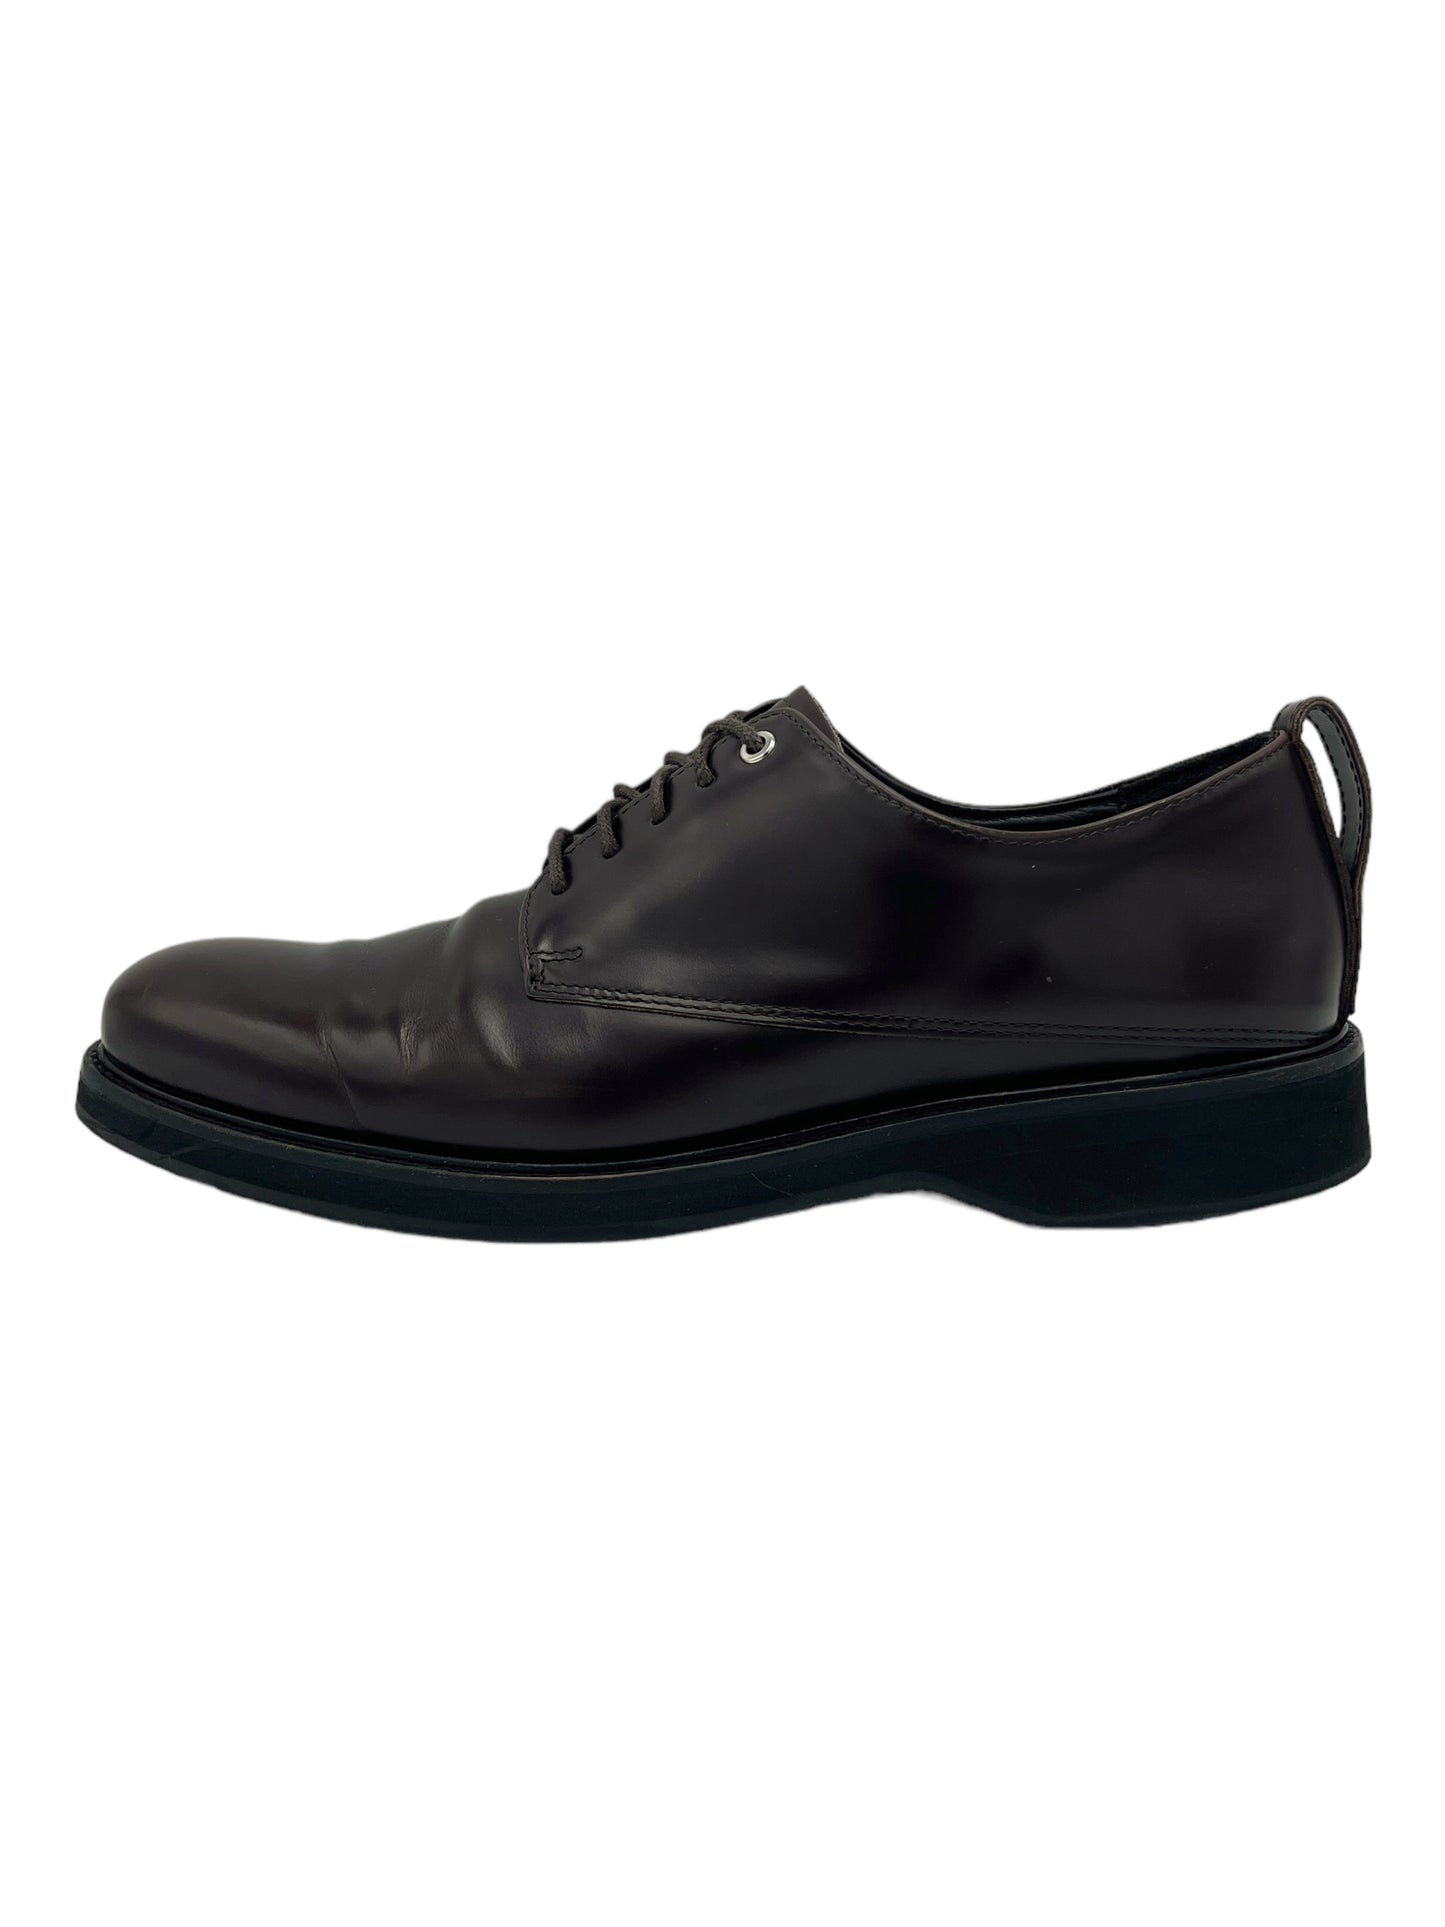 Want Les Essentiels Dark Brown Leather Derby Dress Shoes 9 M / 10.5 W